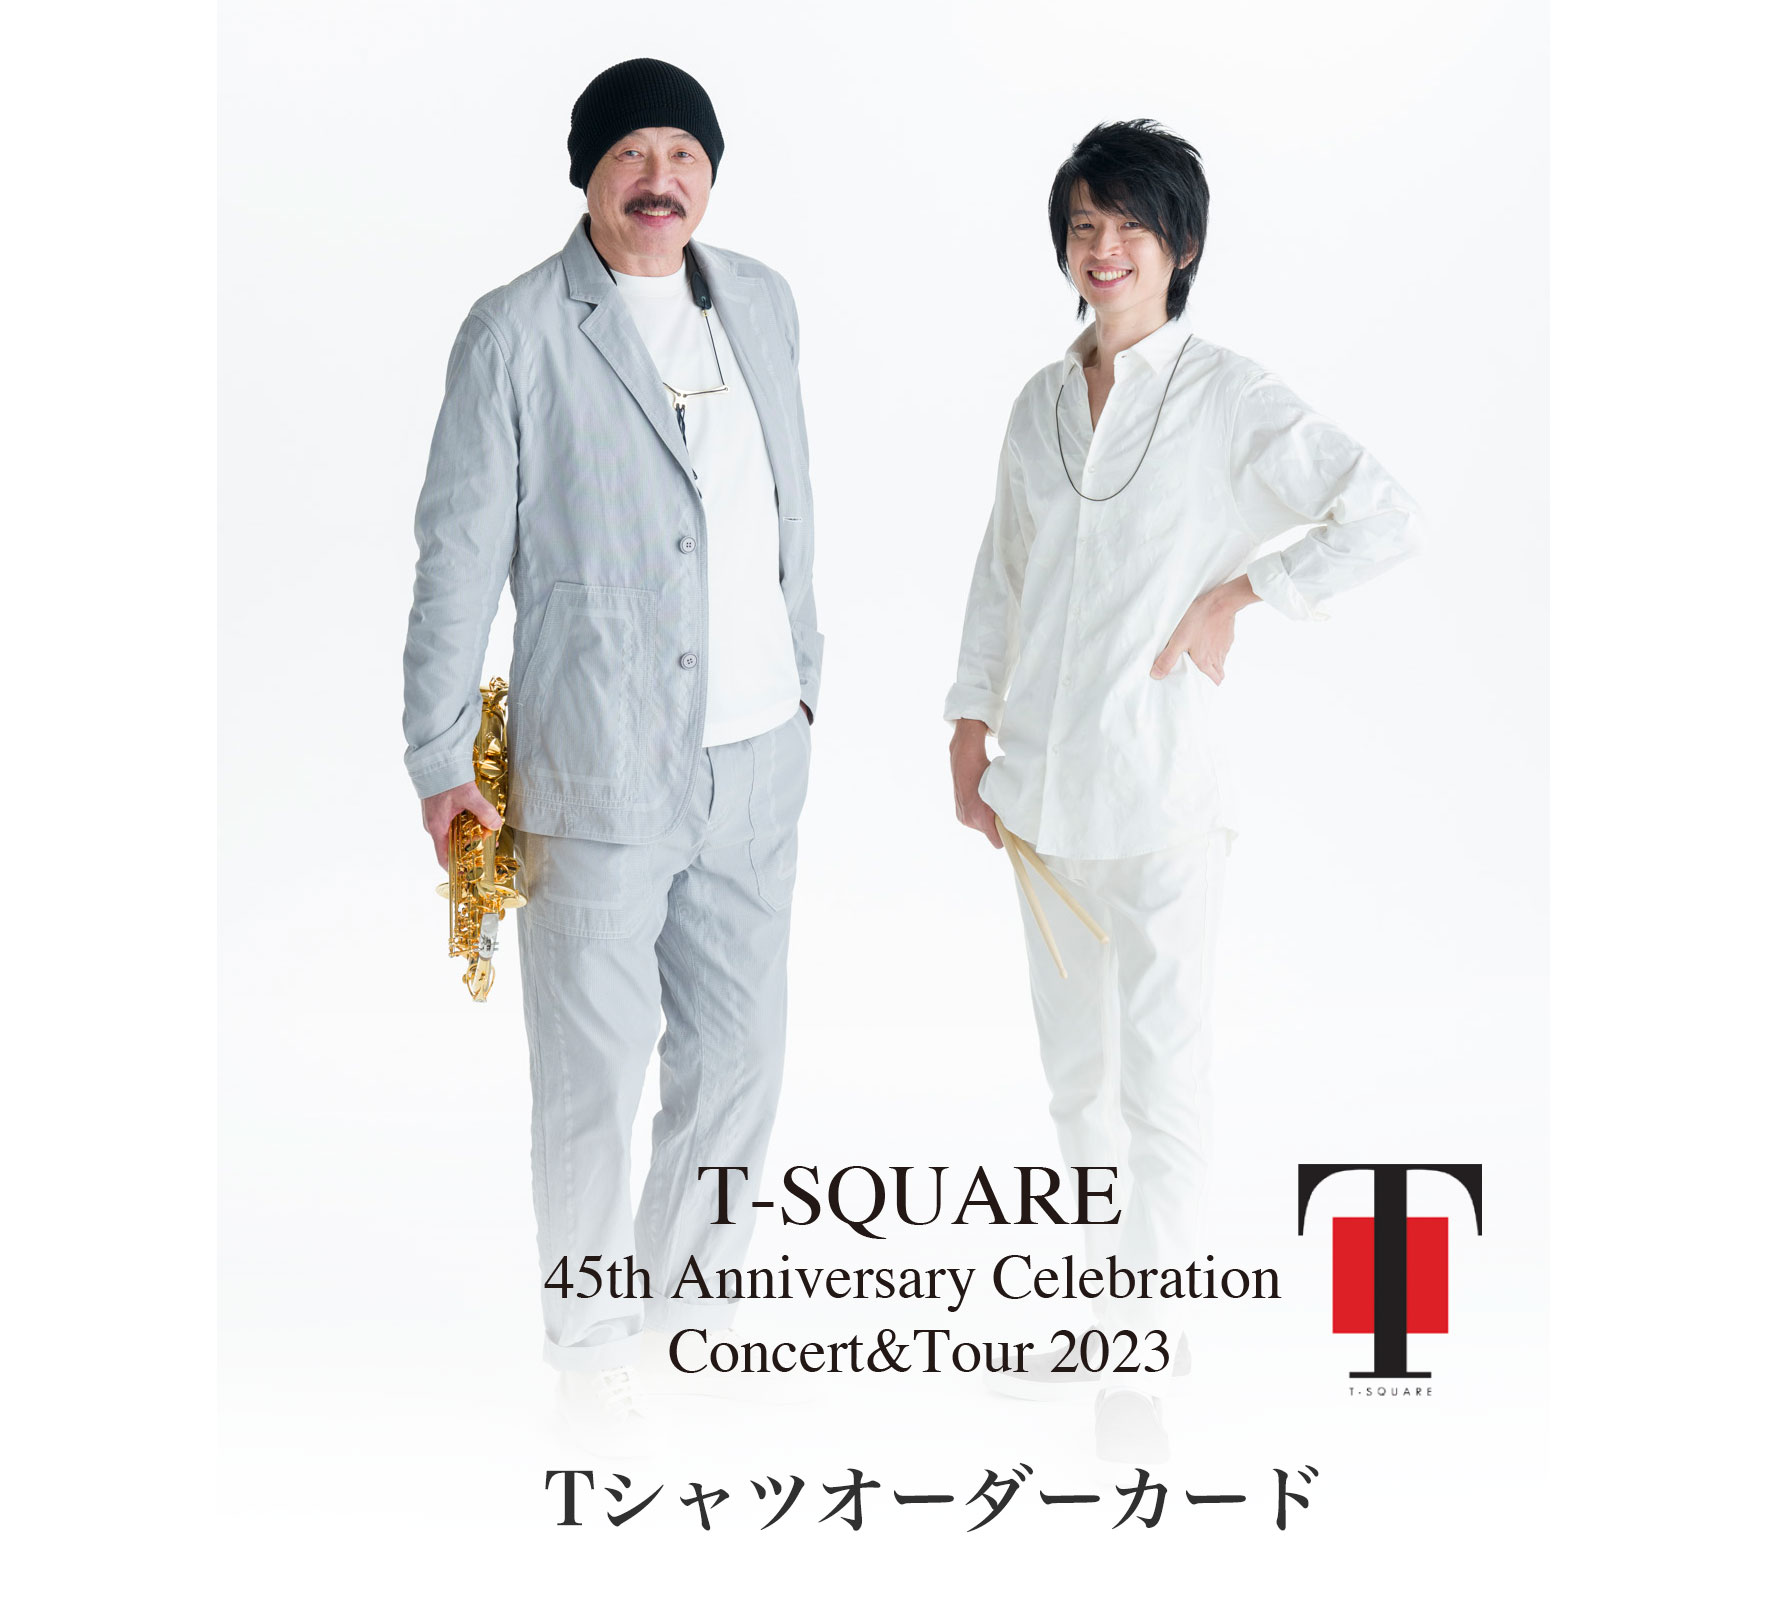 T-SQUARE「45th Anniversary Celebration Concertu0026Tour 2023」 Tシャツオーダーカード |  リットーミュージック